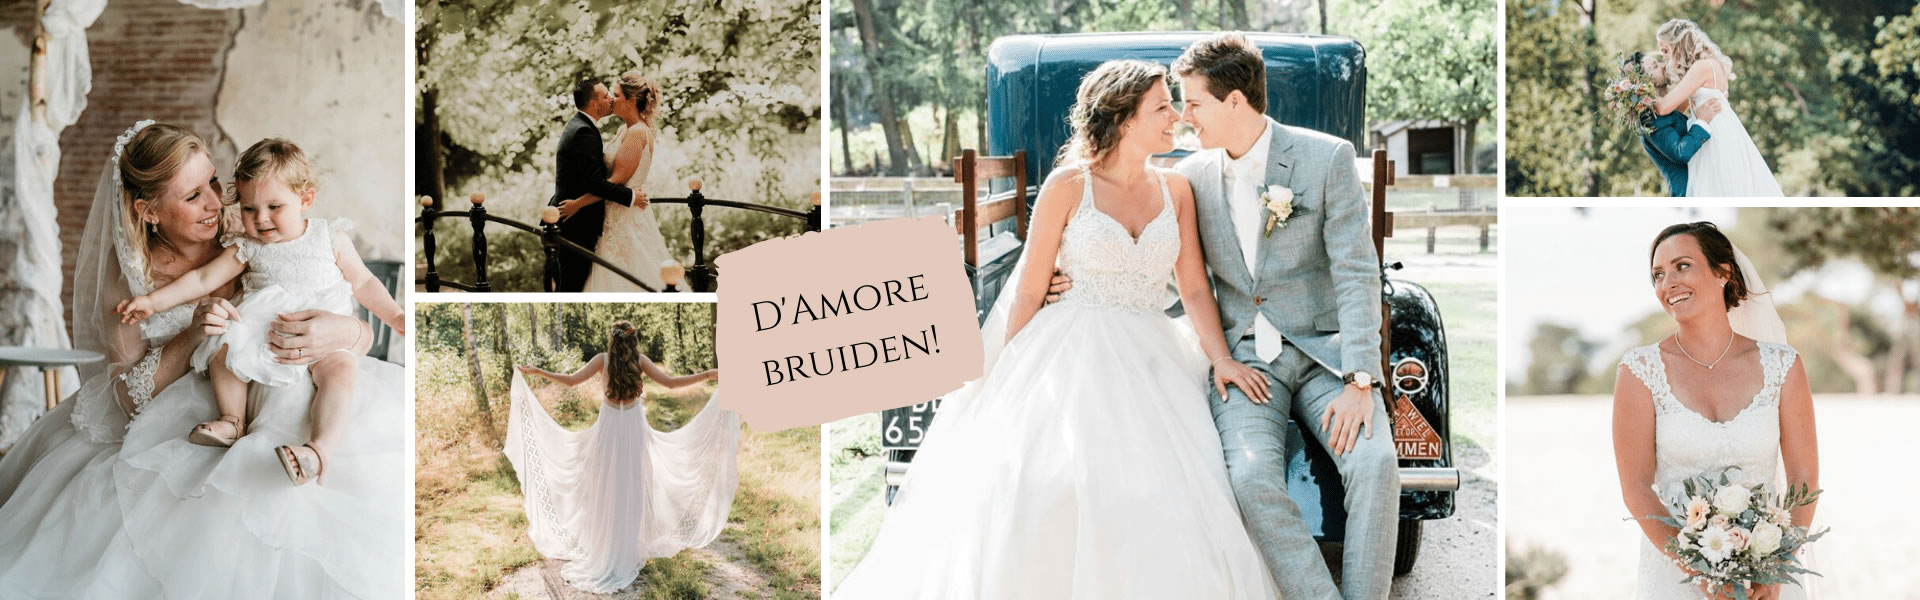 Website-banner-damore-bruiden